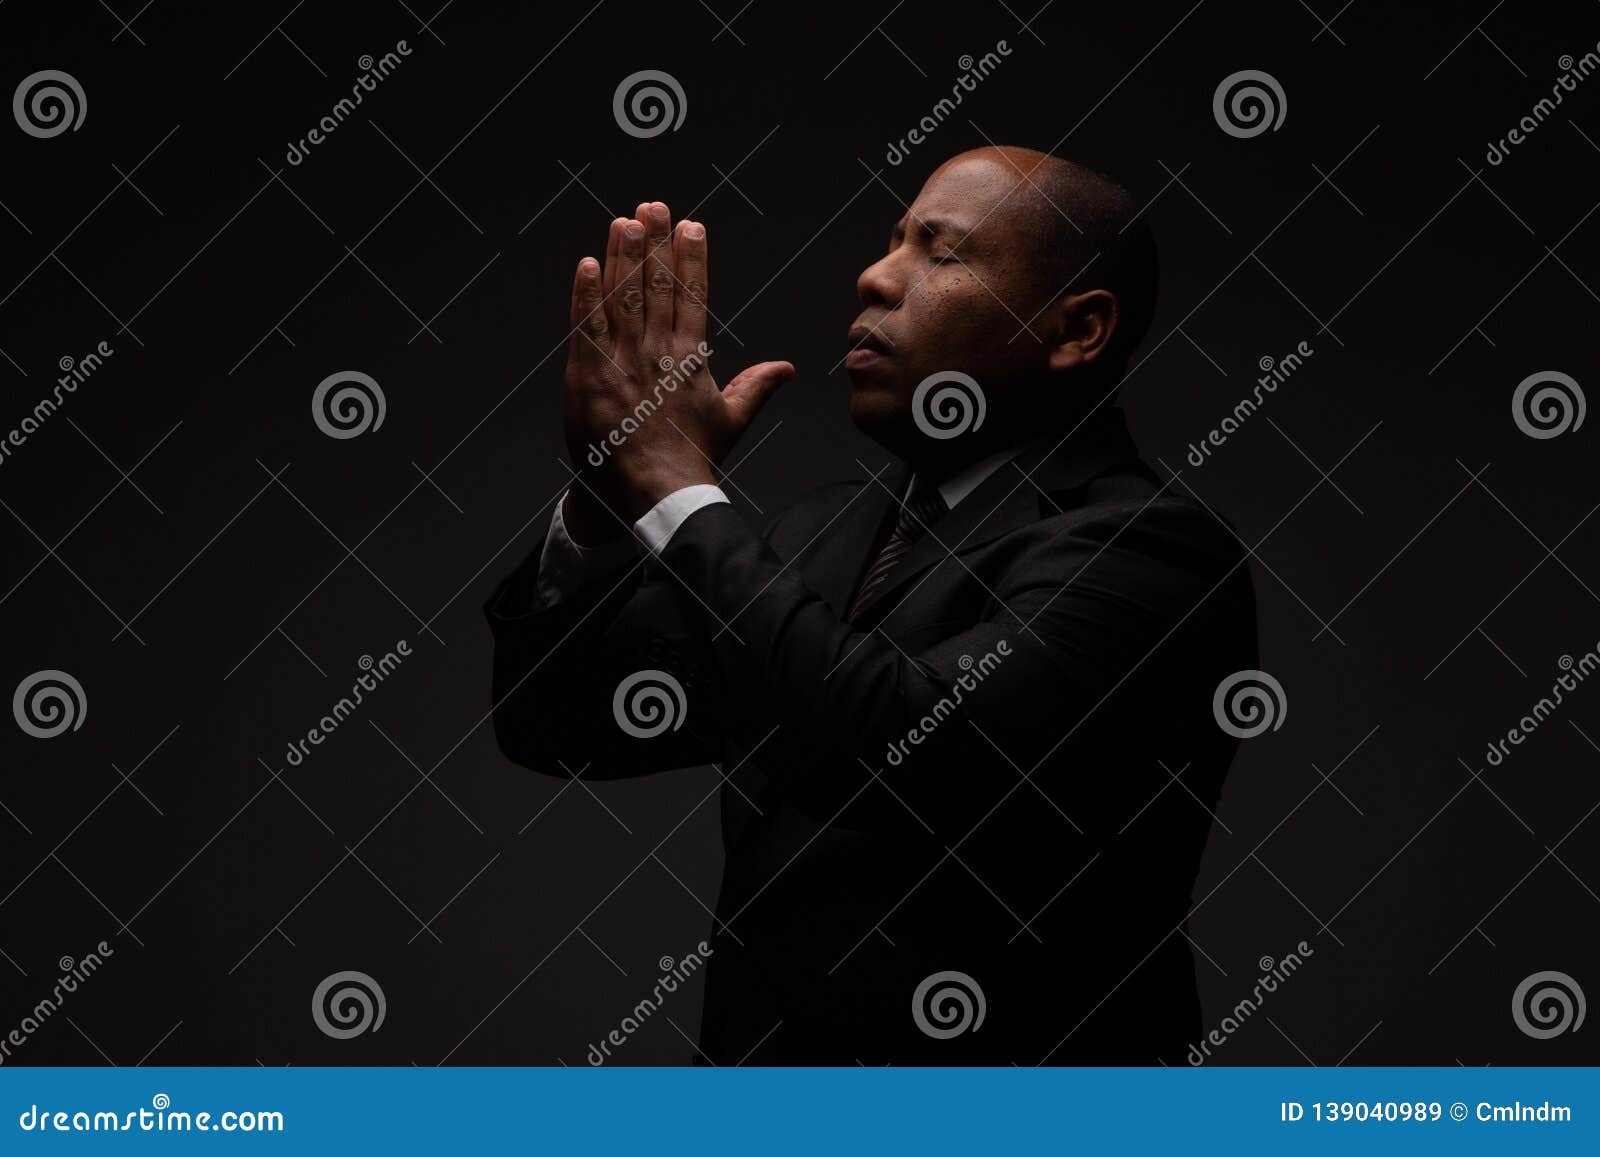 african american christian man praying and seeking guidance from god